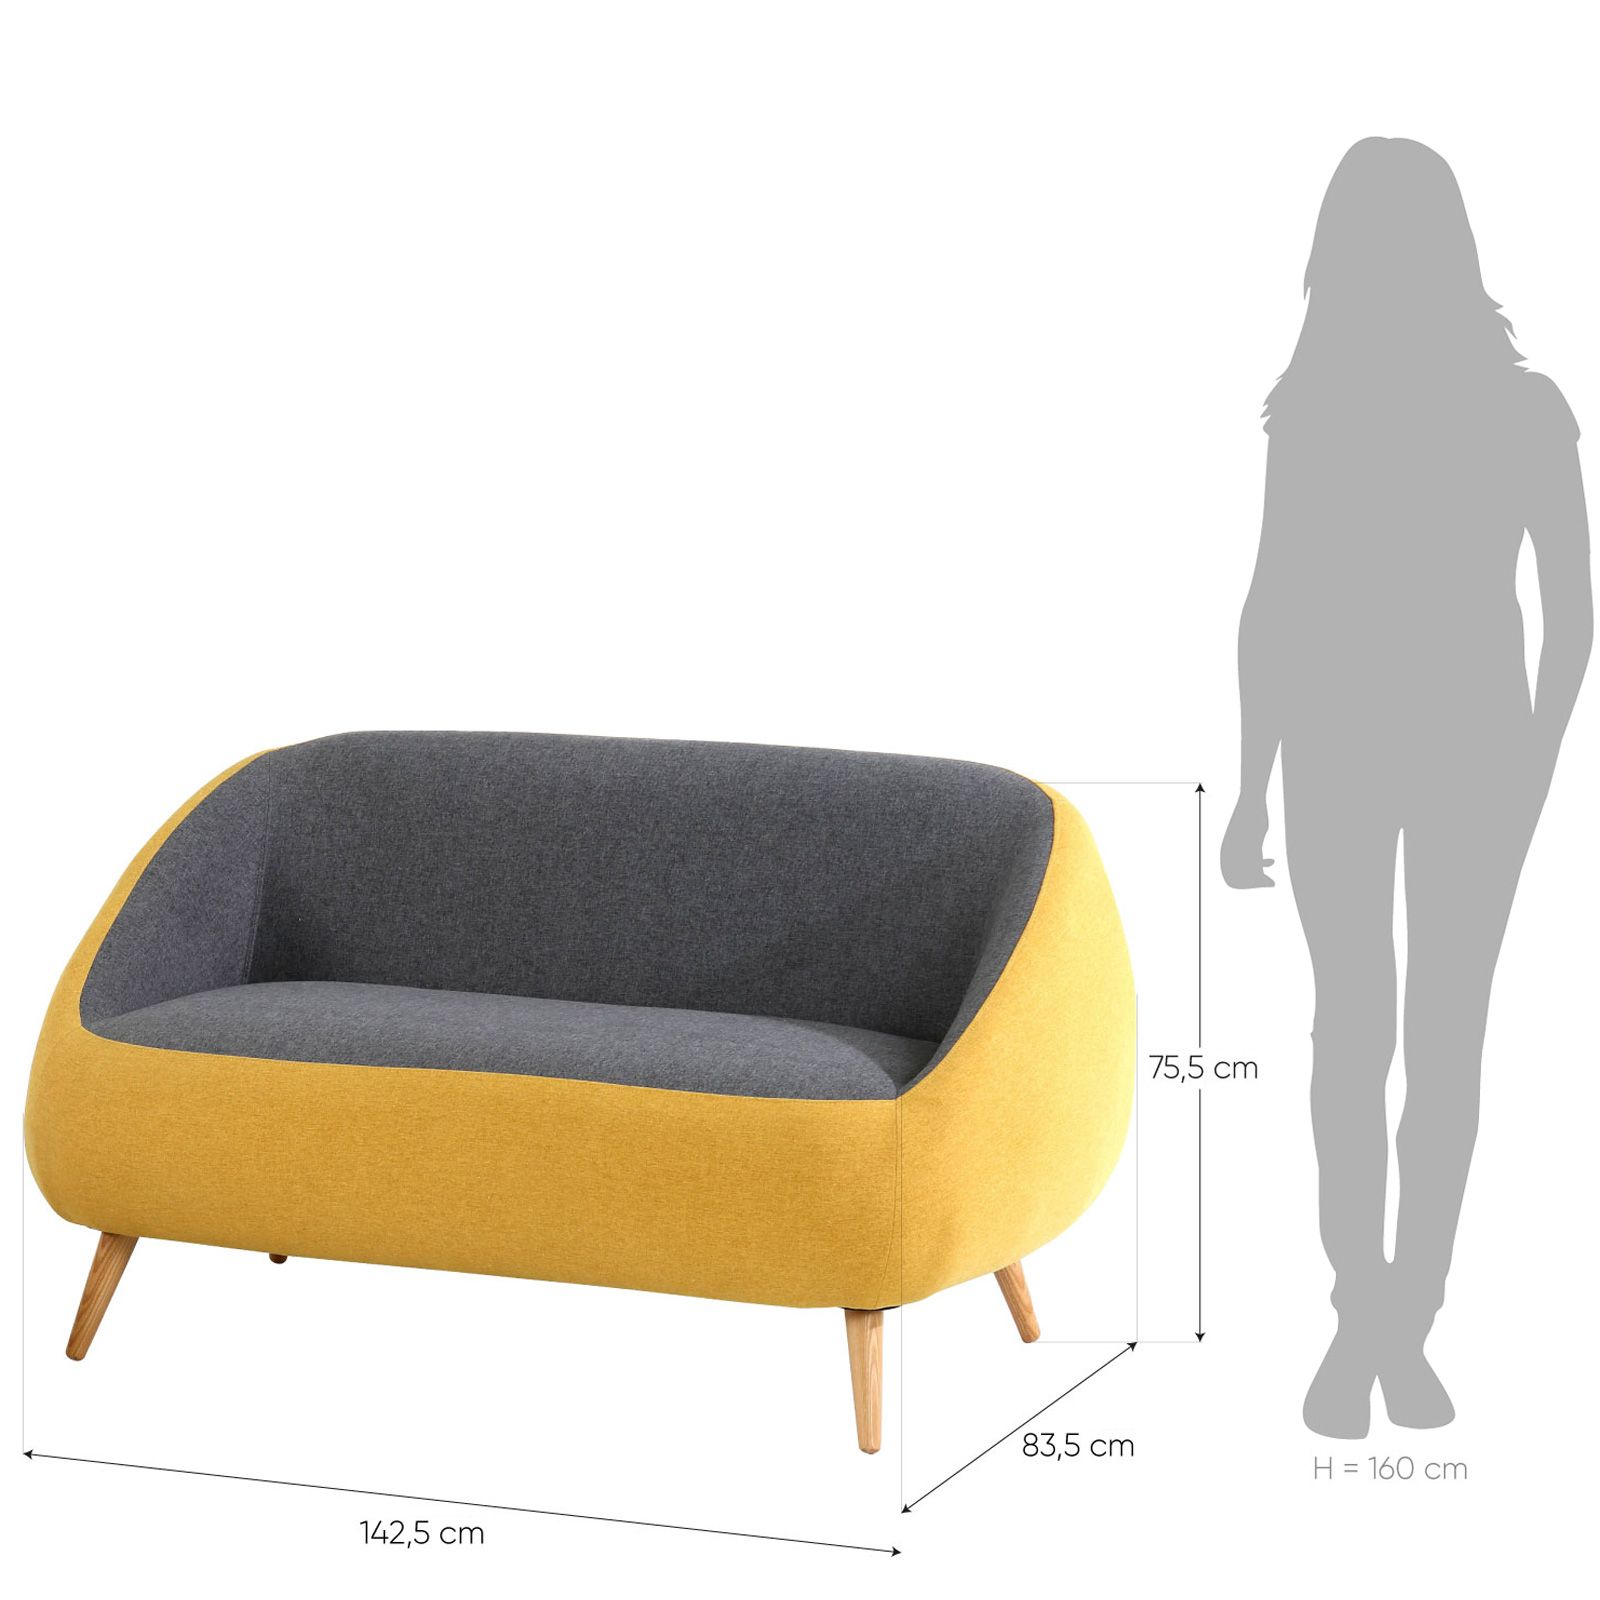 MARPE | Sofá con brazos tapizado bicolor mostaza/gris (142,5 x 83,5 x 75,5 cm) 